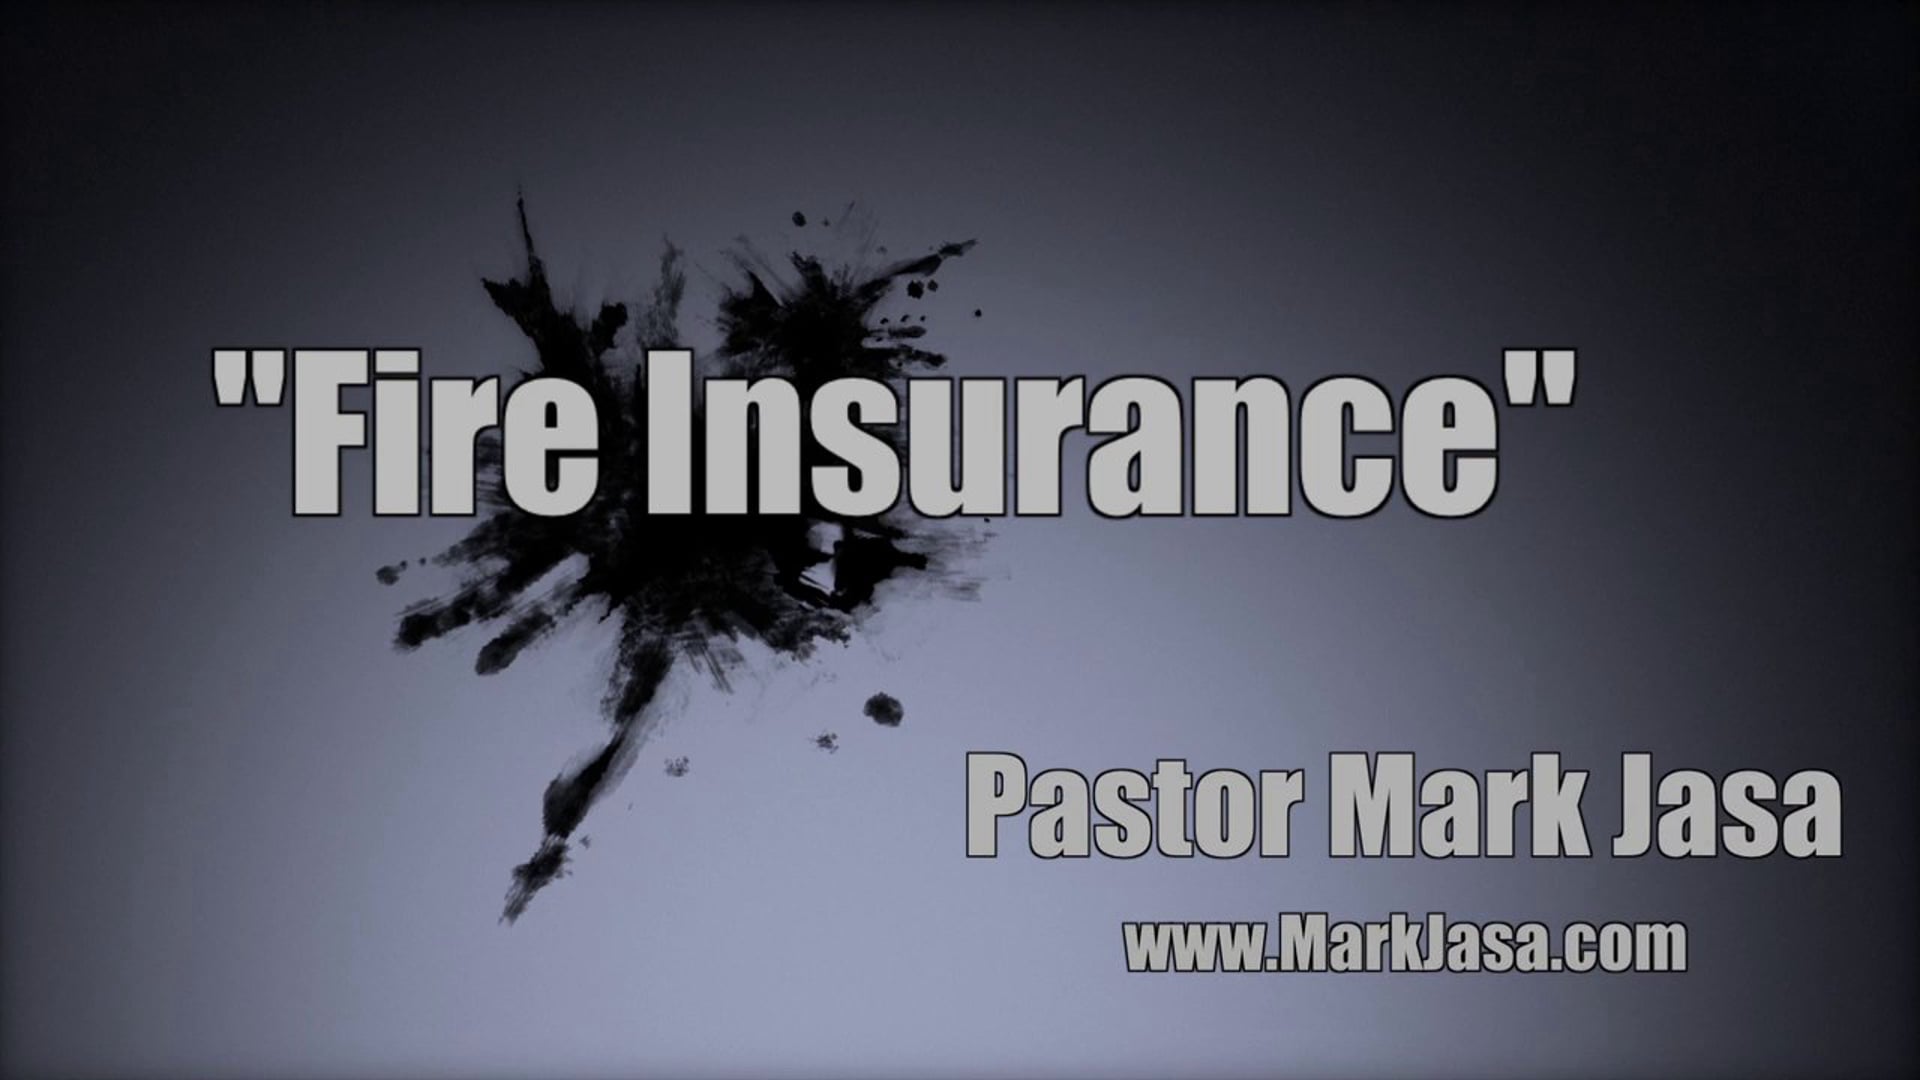 "Fire Insurance" by Pastor Mark Jasa